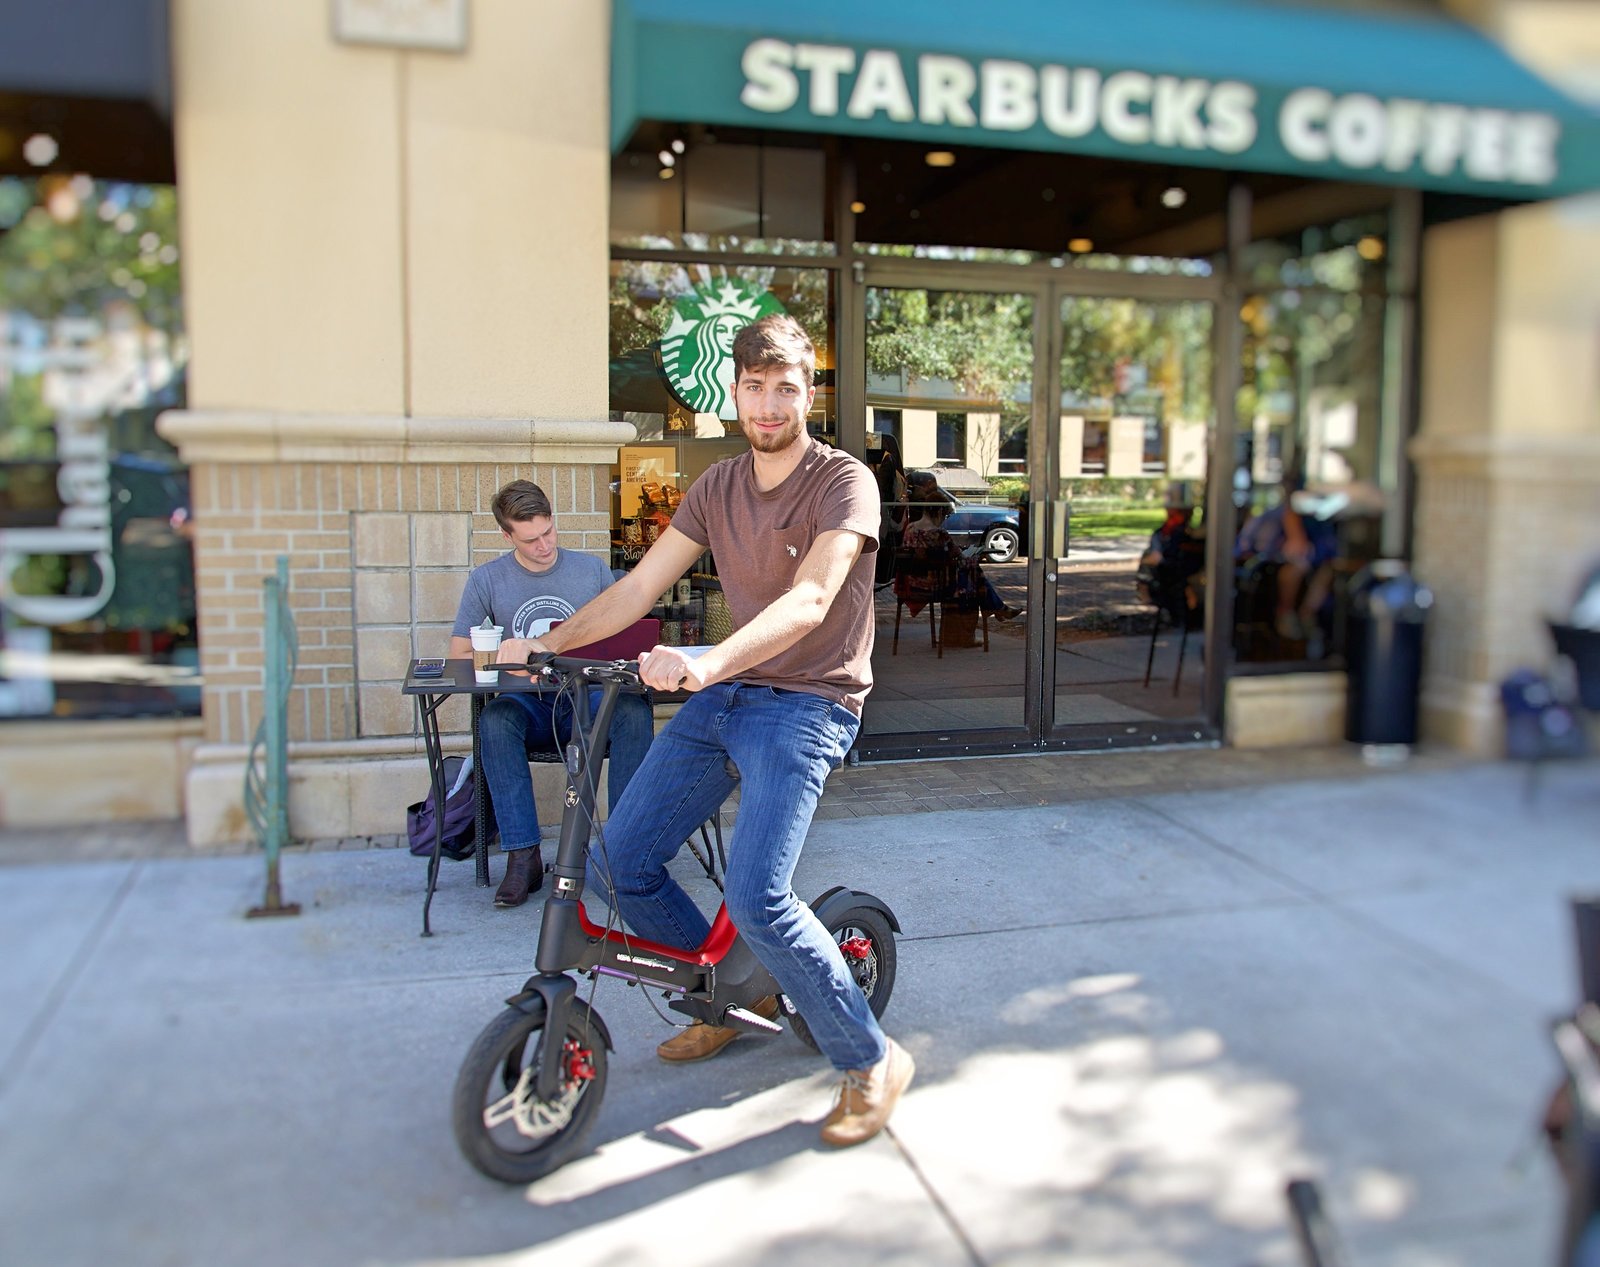 Red Go-Bike M3 in front of Starbucks